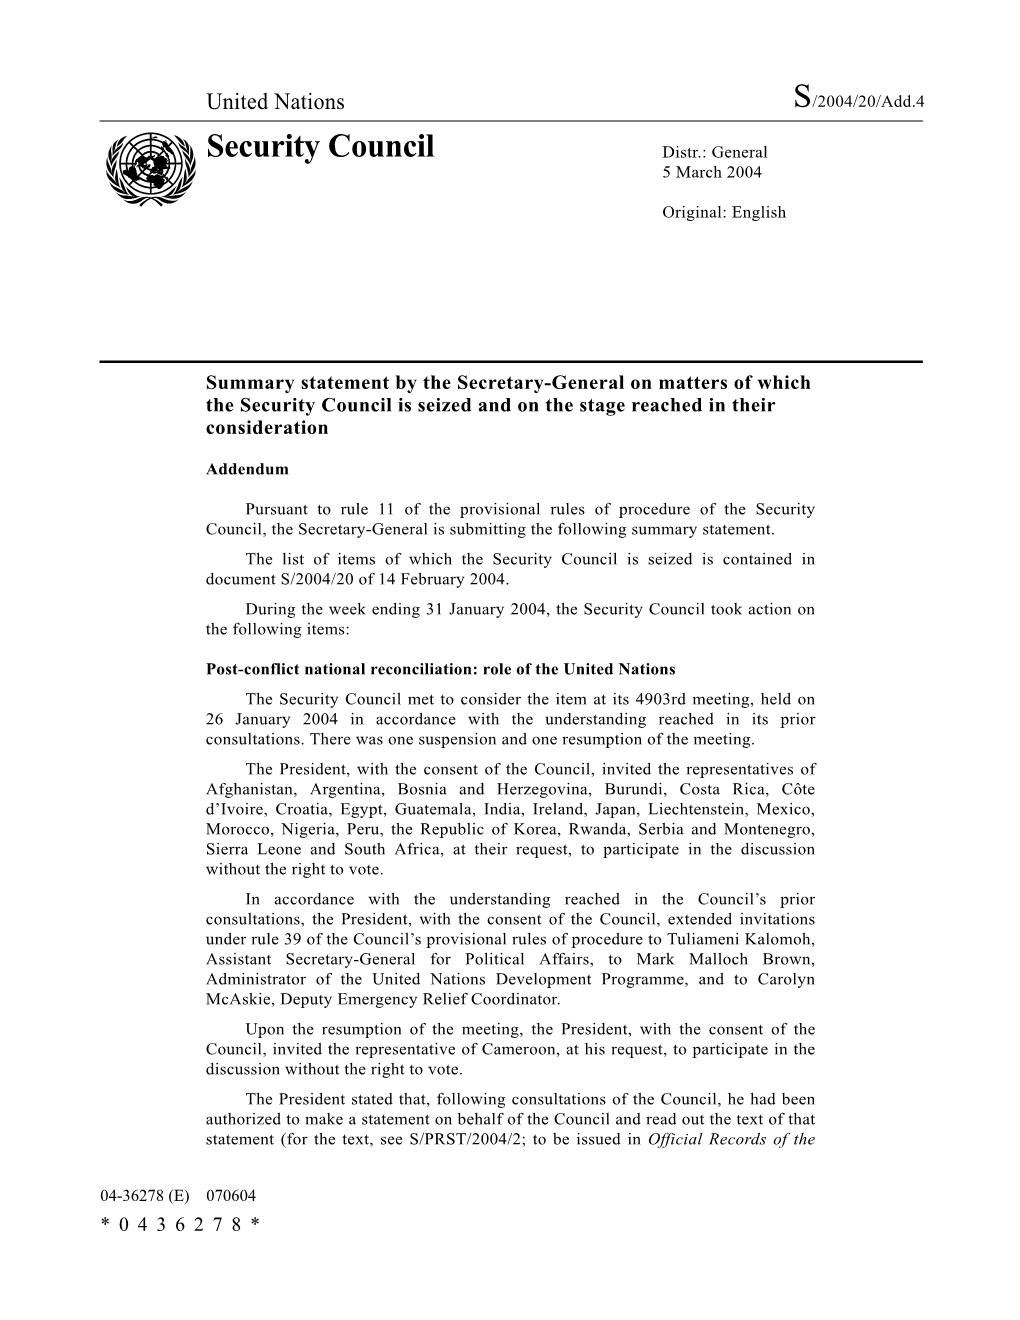 Security Council Distr.: General 5 March 2004